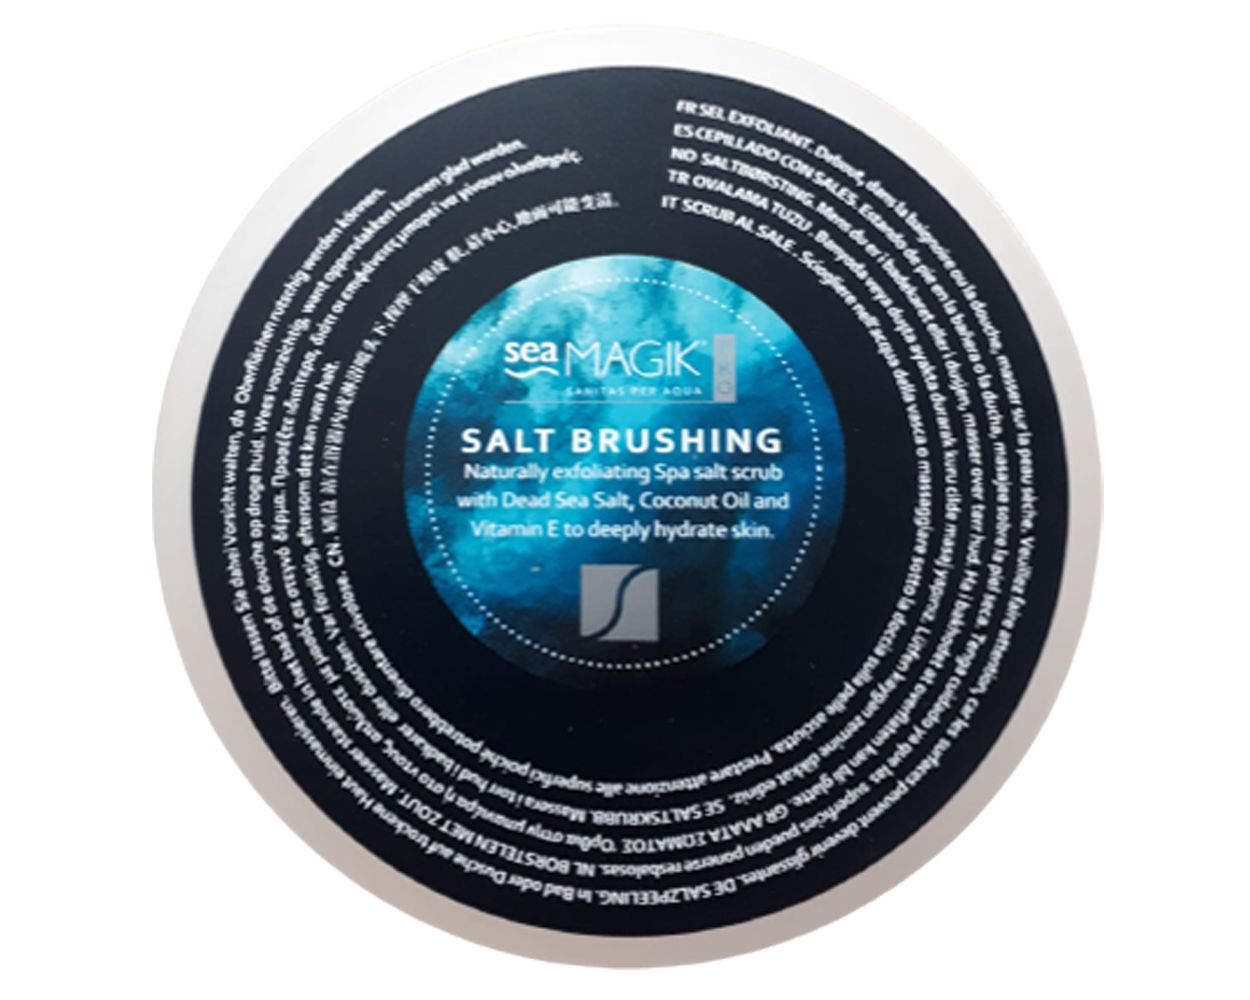 Sea Magik - Salt Brushing 500g